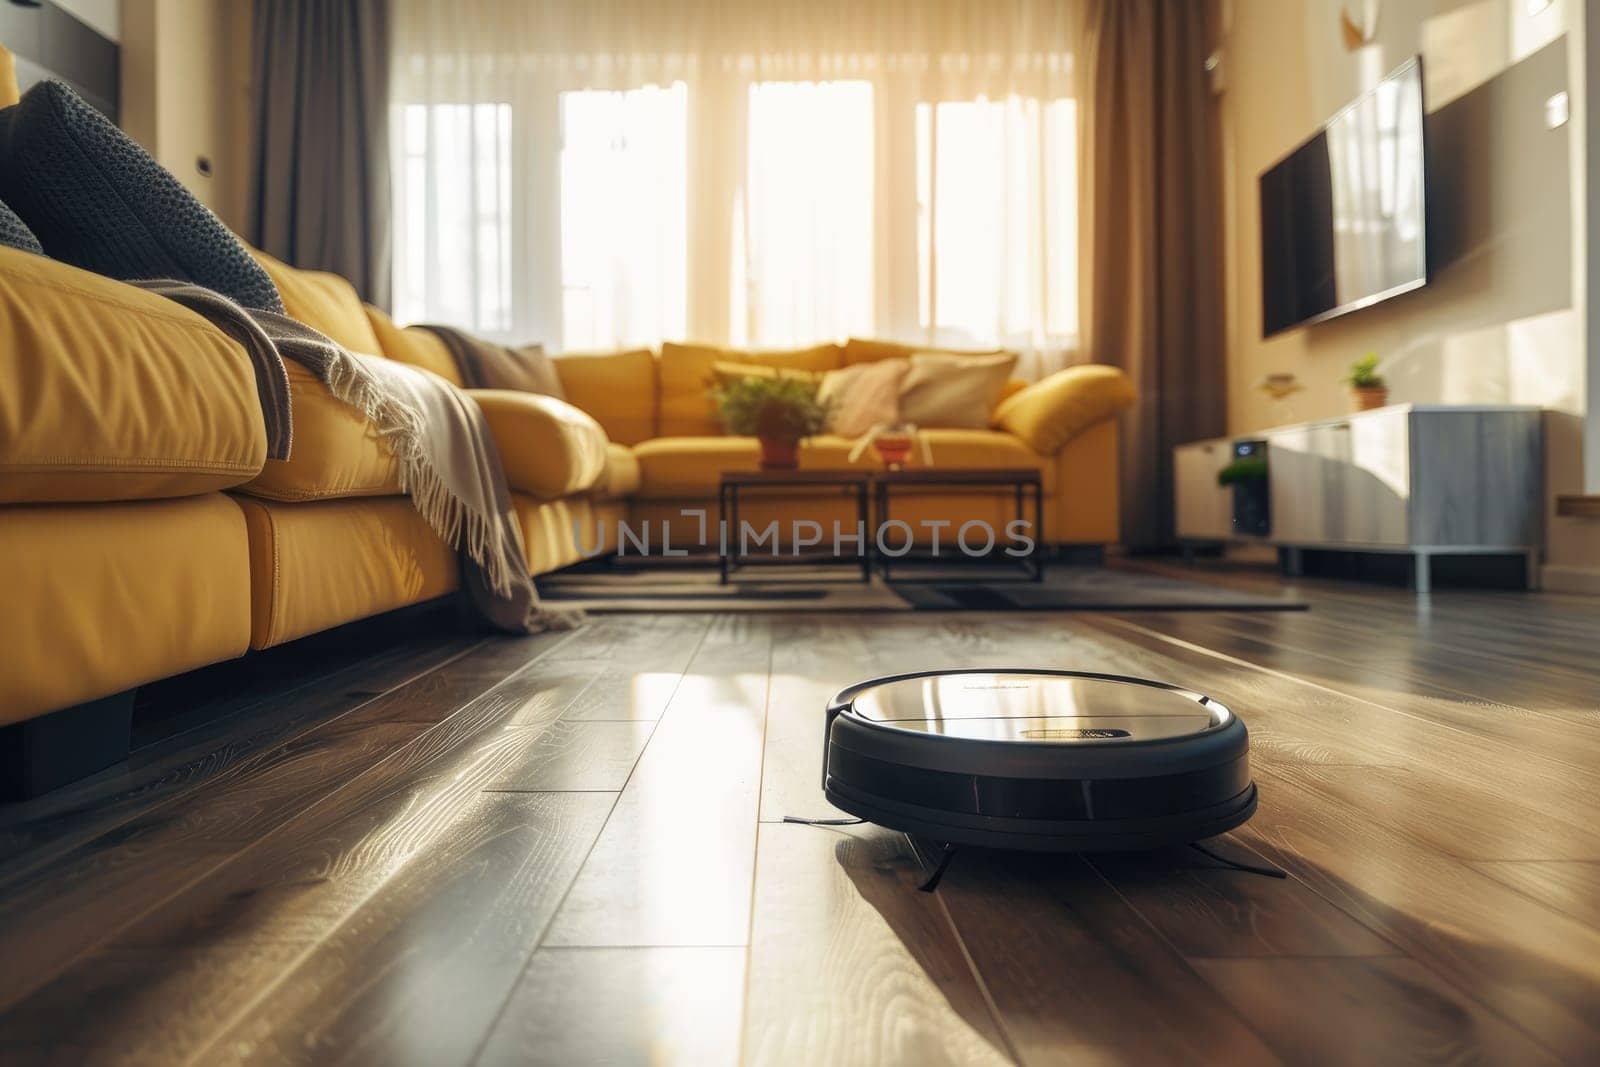 A robot vacuum cleaner navigates a clean living room floor